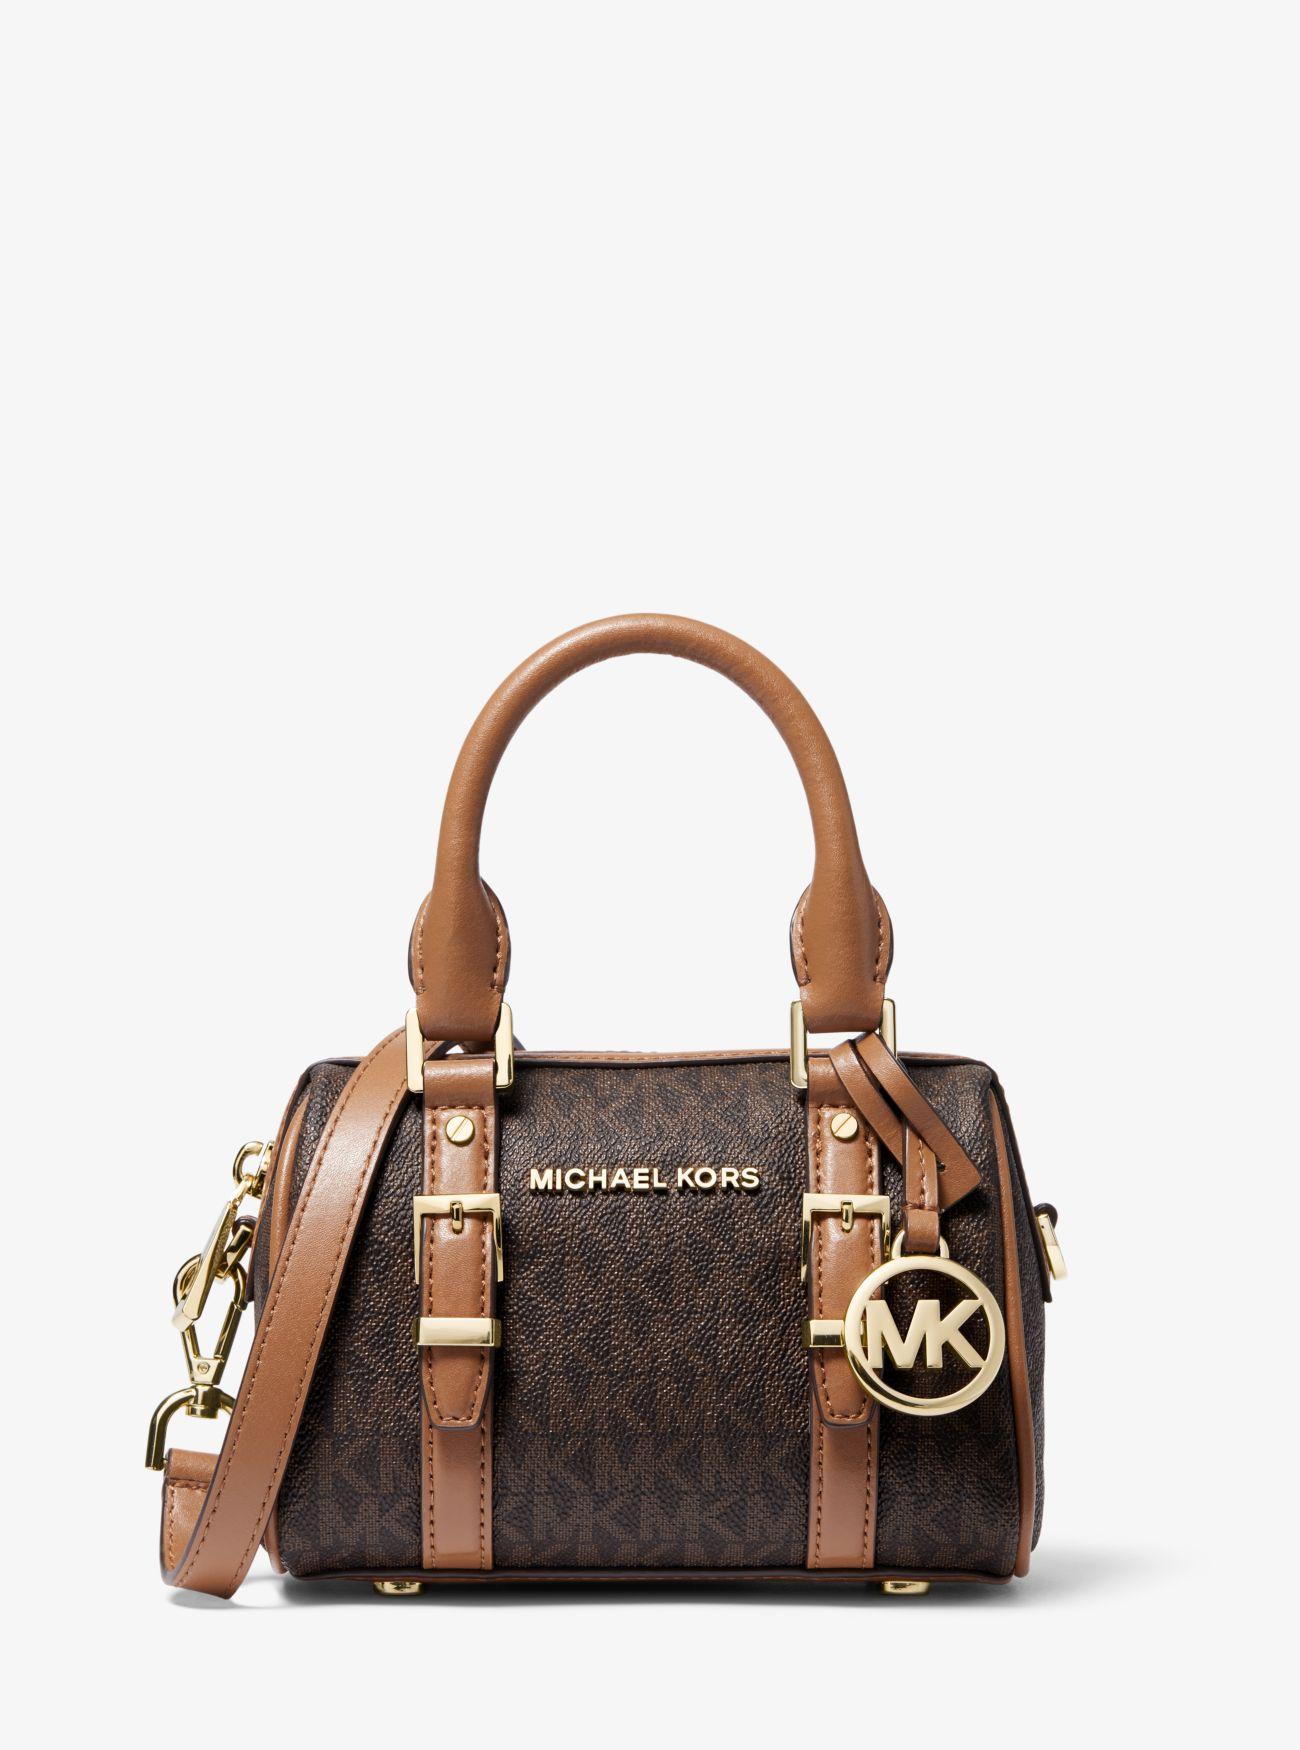 Michael Kors Small Brown Handbags For Women's | semashow.com